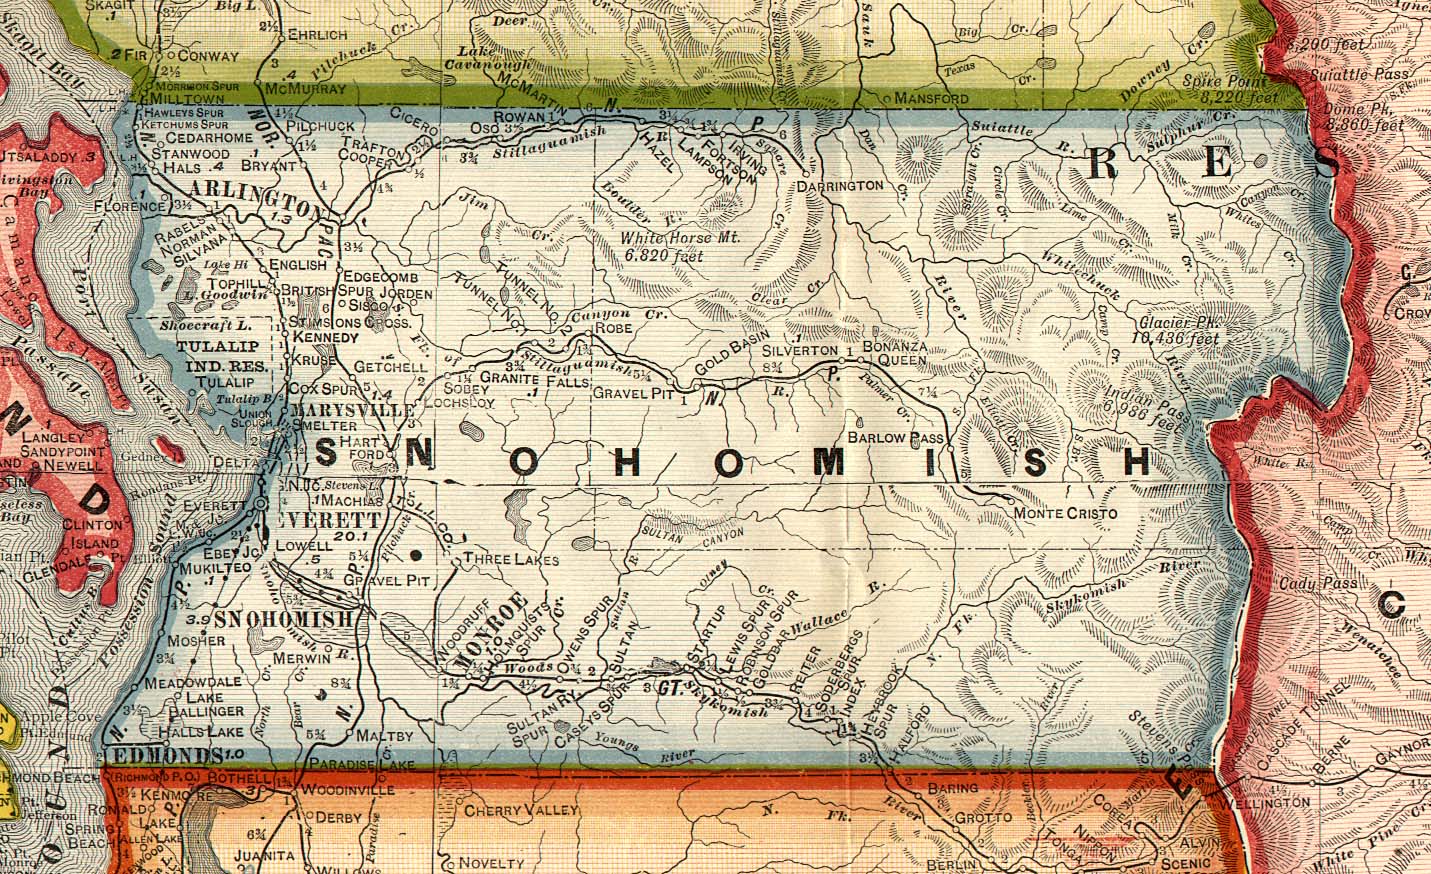 snohomish-county-washington-1909-map-mappery